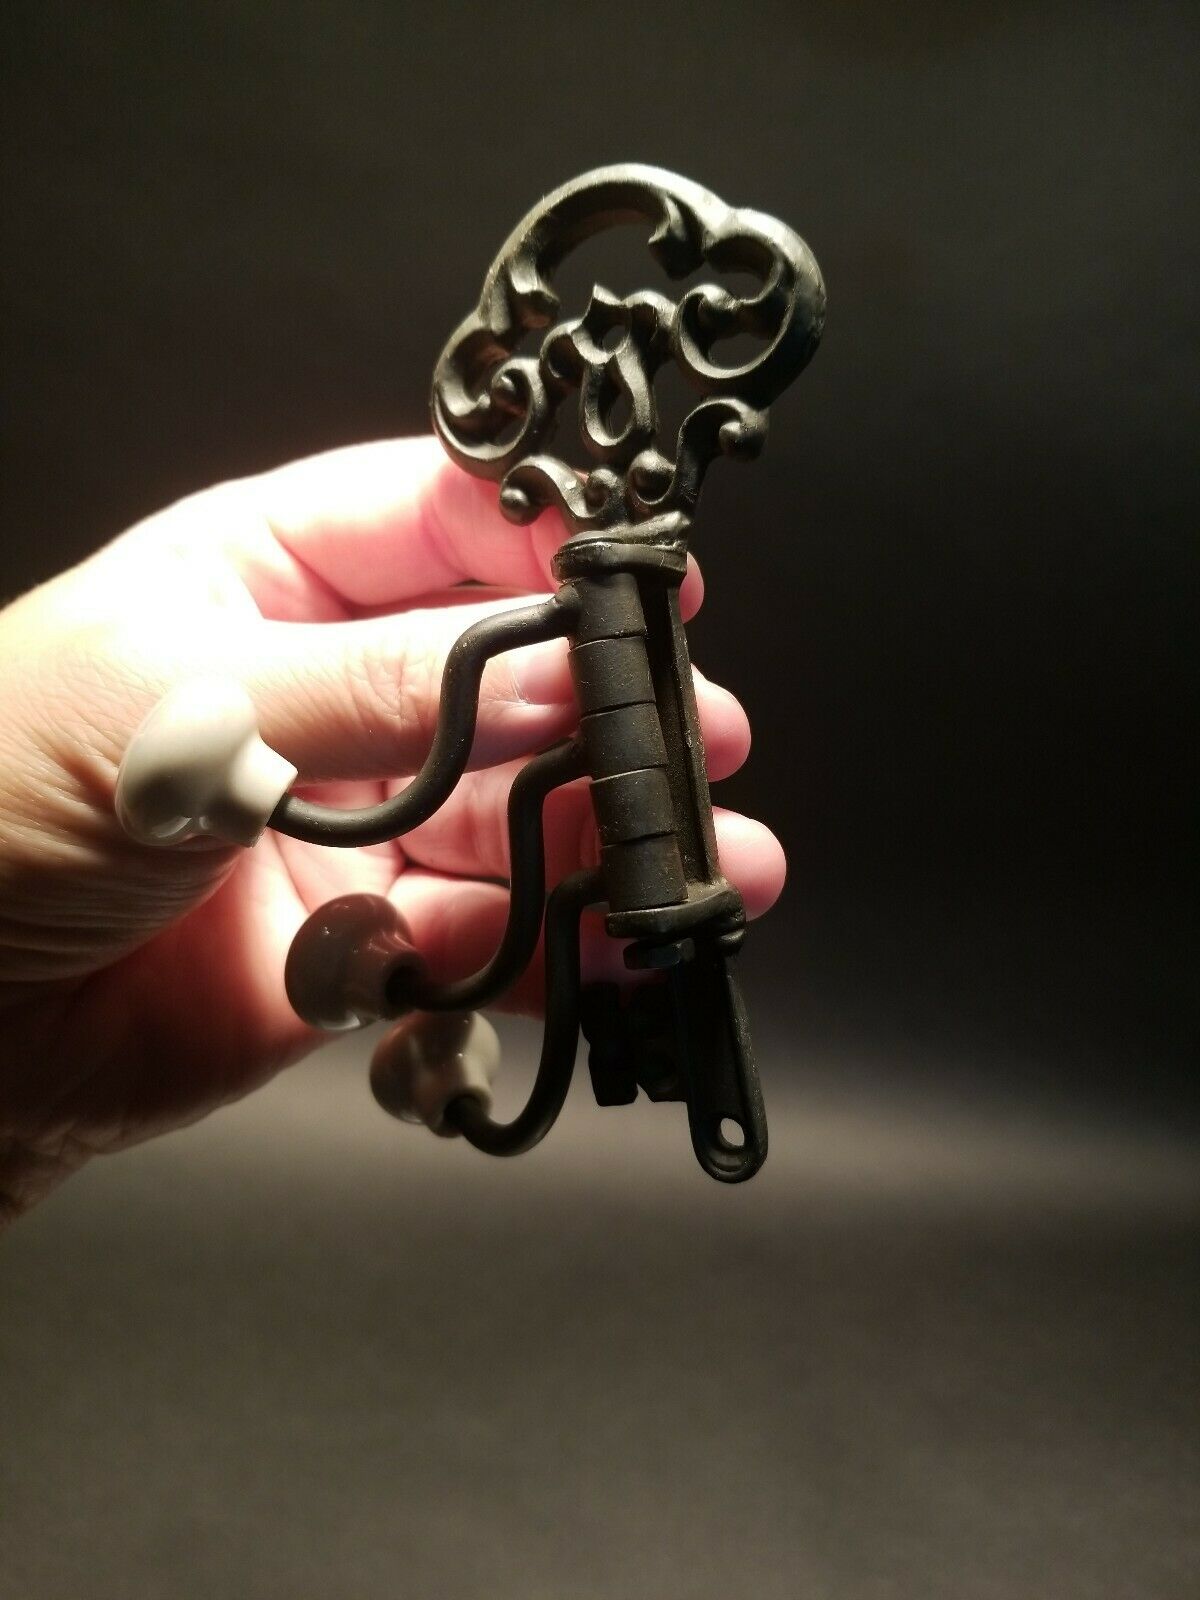 Antique Vintage Style Cast Iron Key Swivel Hook W Porcelain Knobs - Early Home Decor